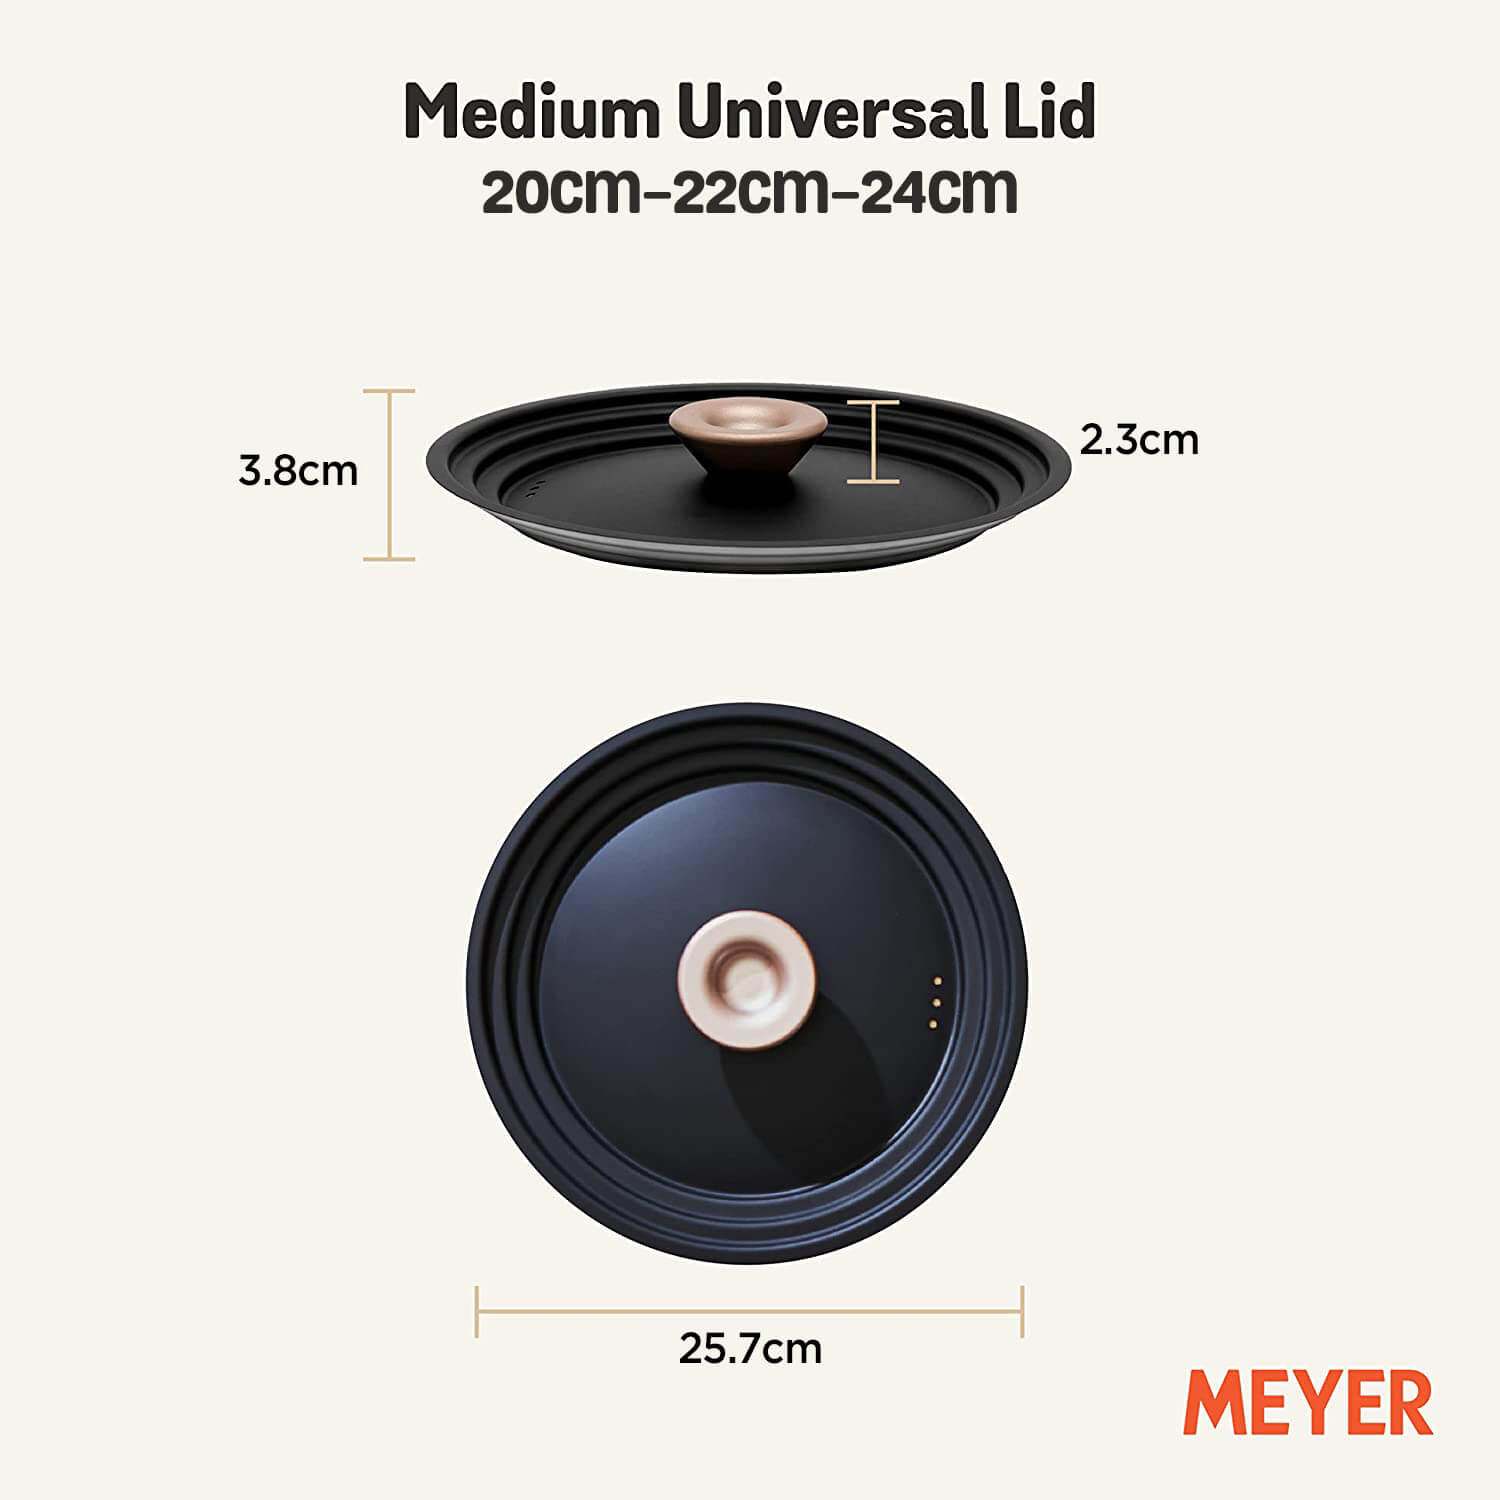 Meyer Accent Series Stainless Steel Universal Lid, Medium, 24cm, Matte Black